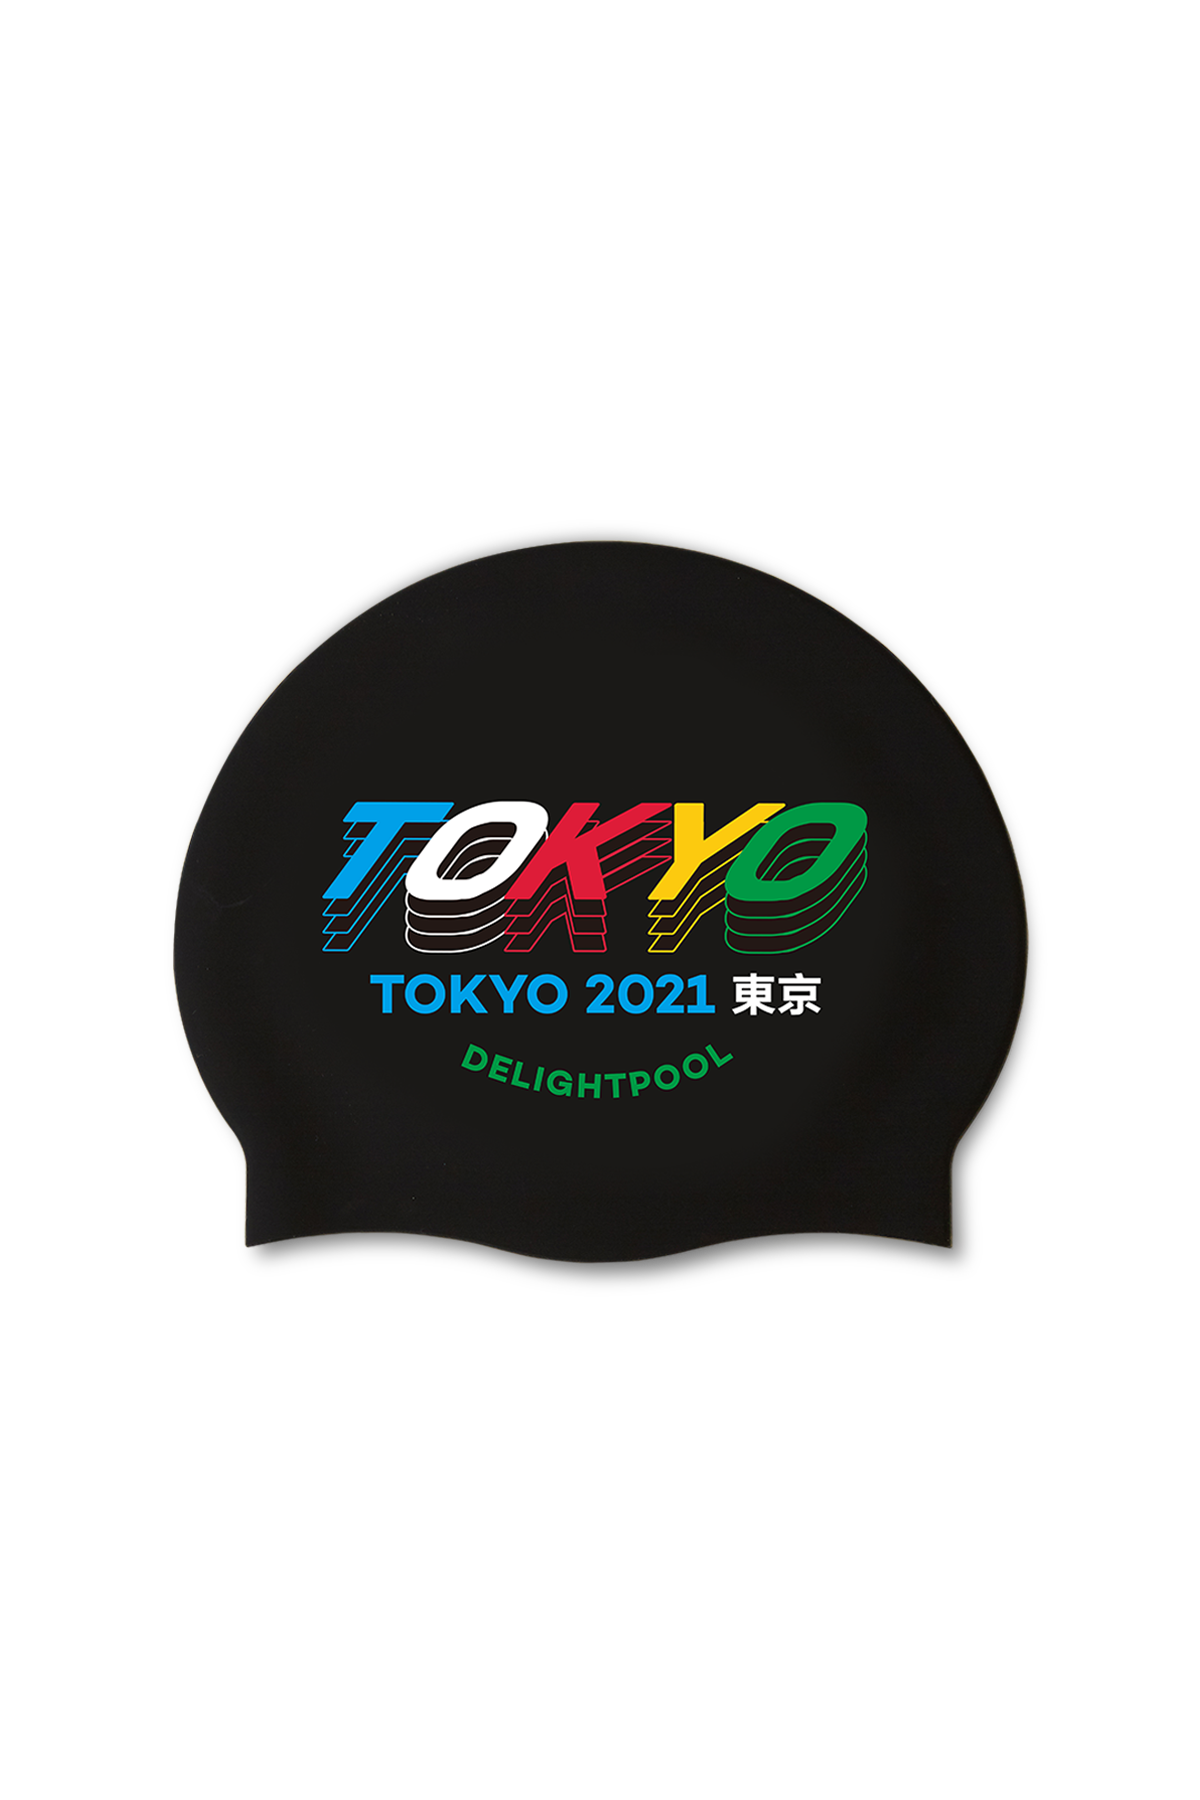 TOKYO 2021 swim cap (Tokyo 2020 Olympic edition) - Black